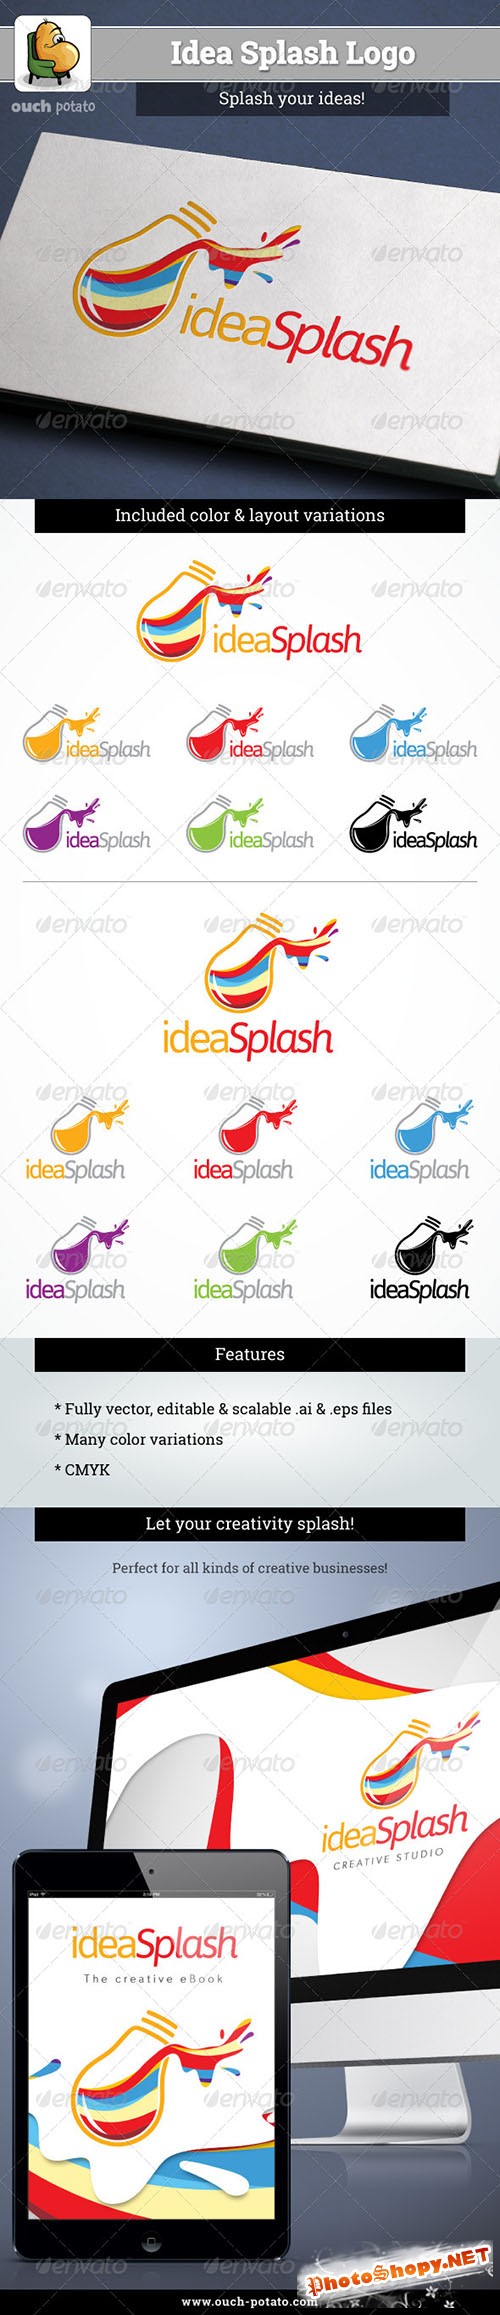 GraphicRiver - Idea Splash Logo 2844181